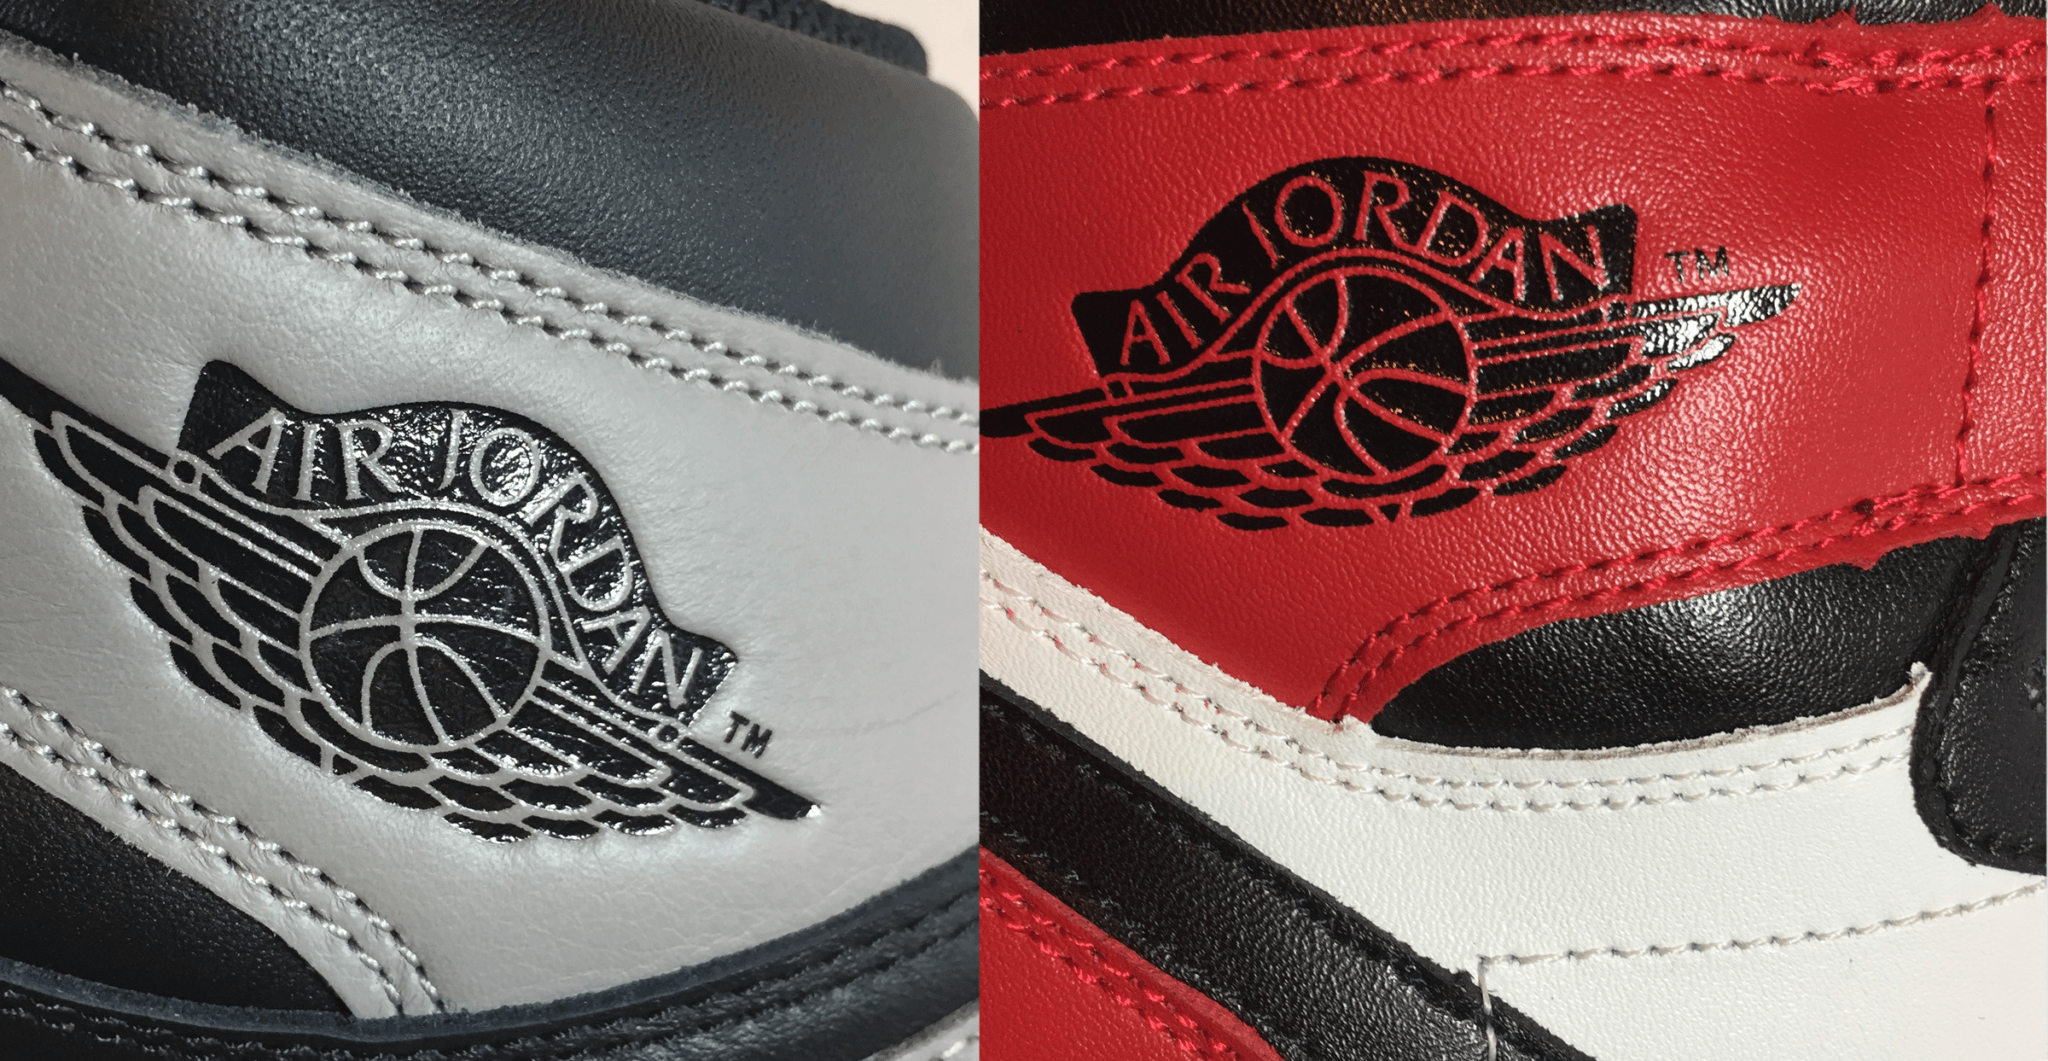 Sneaker with Wings Logo - Jordan Wings Logo Nike Fake Shoes Are Made : The Sneaker